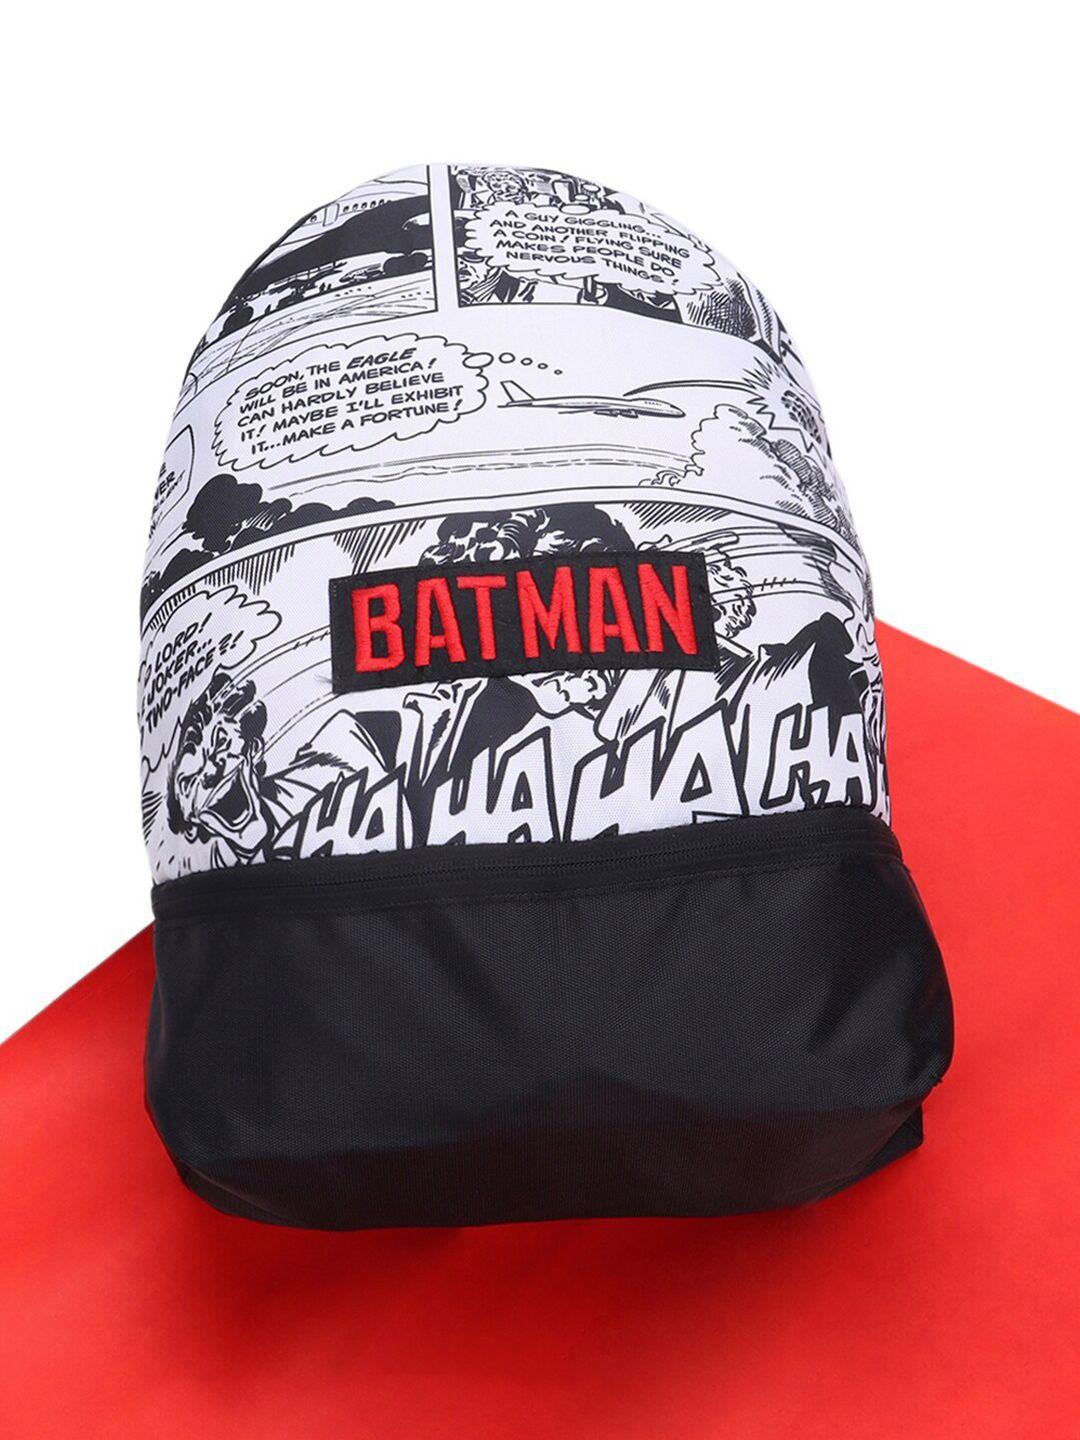 bewakoof unisex batman printed backpack